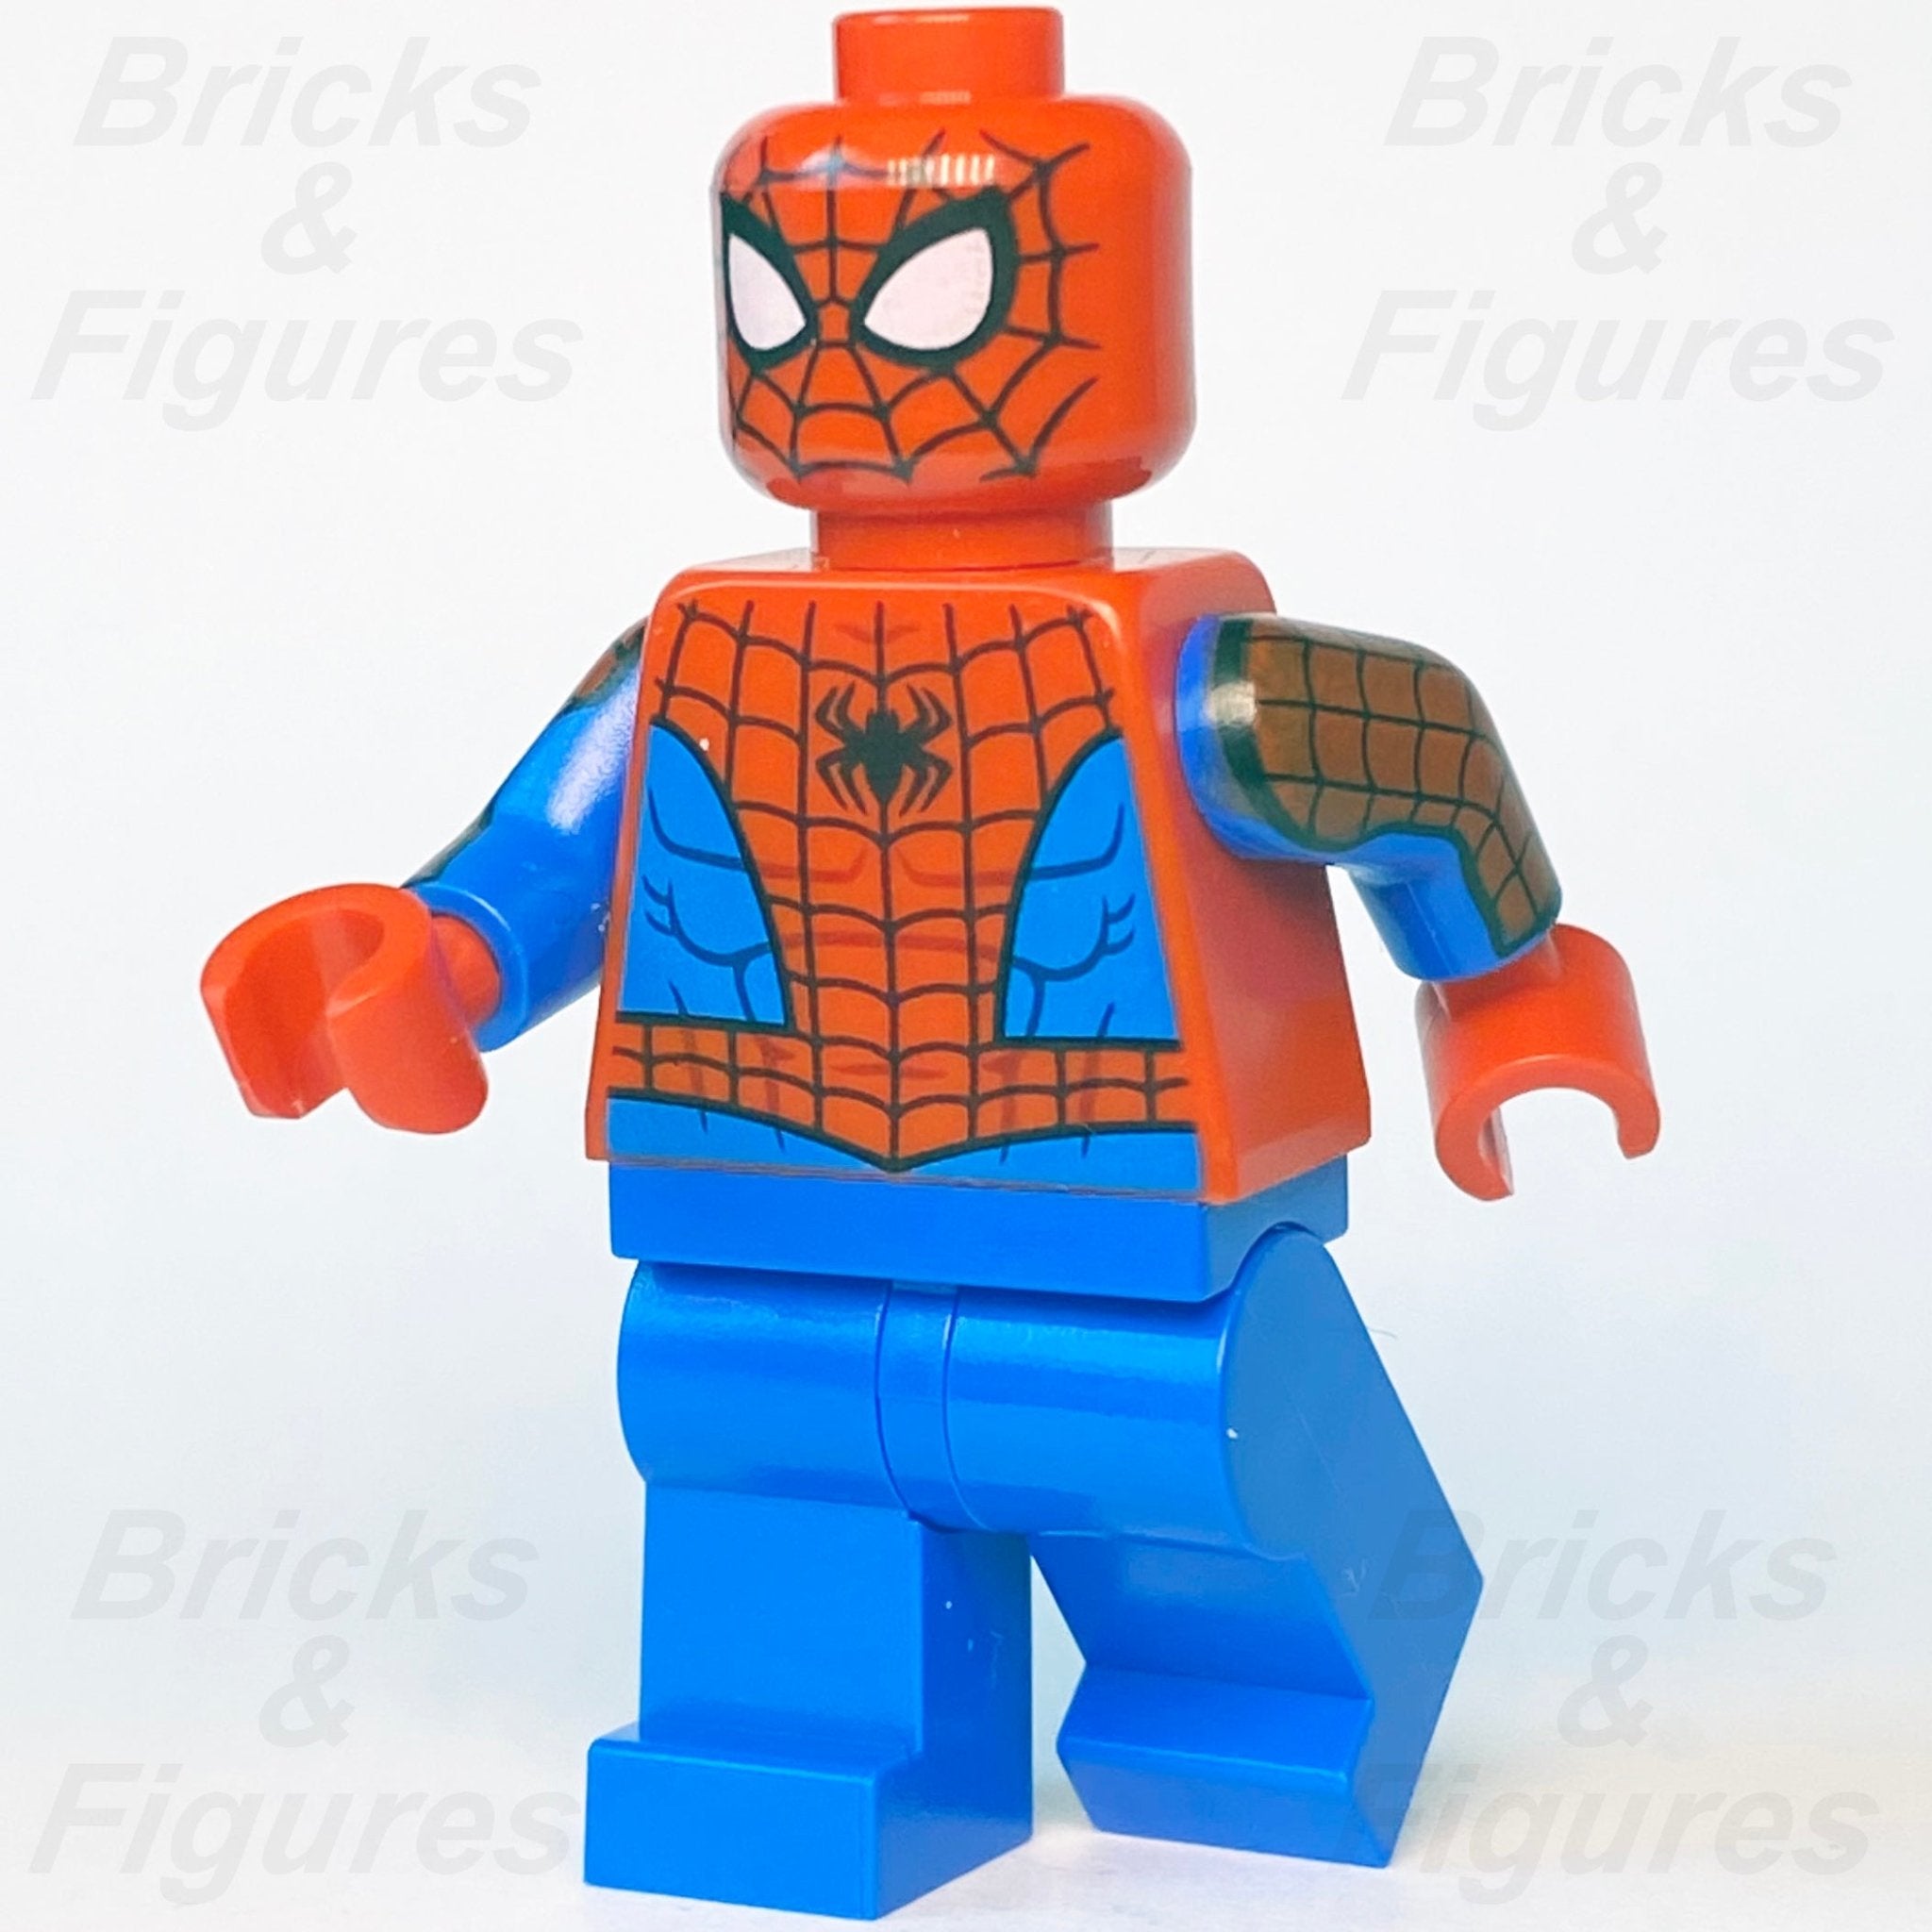 LEGO Spiderman Minifigures